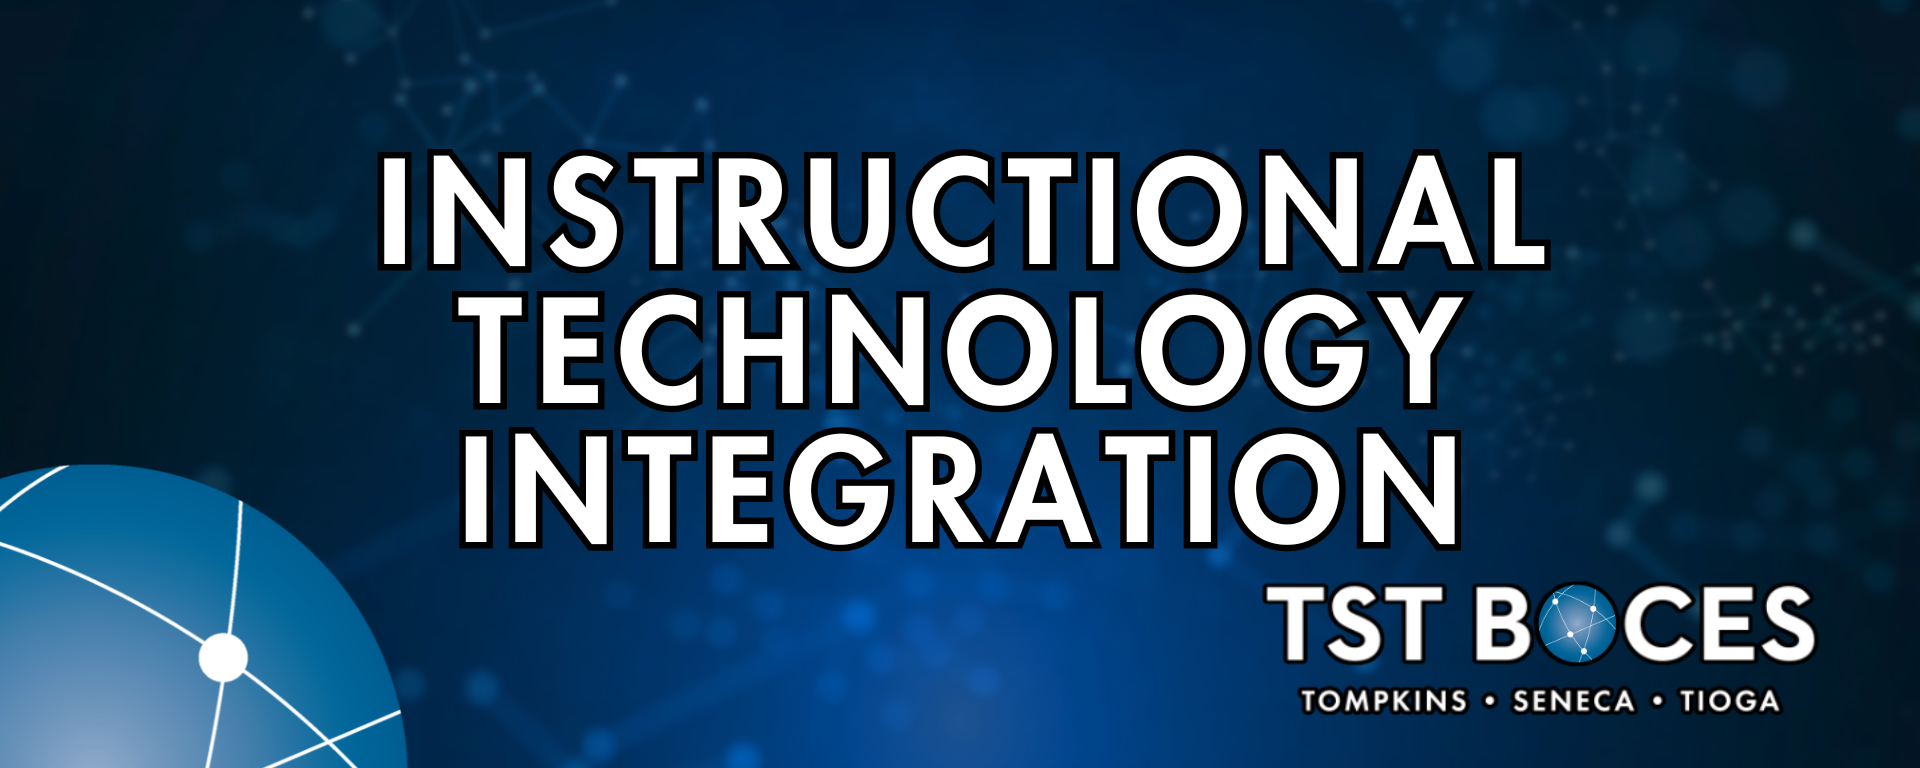 technology integration banner